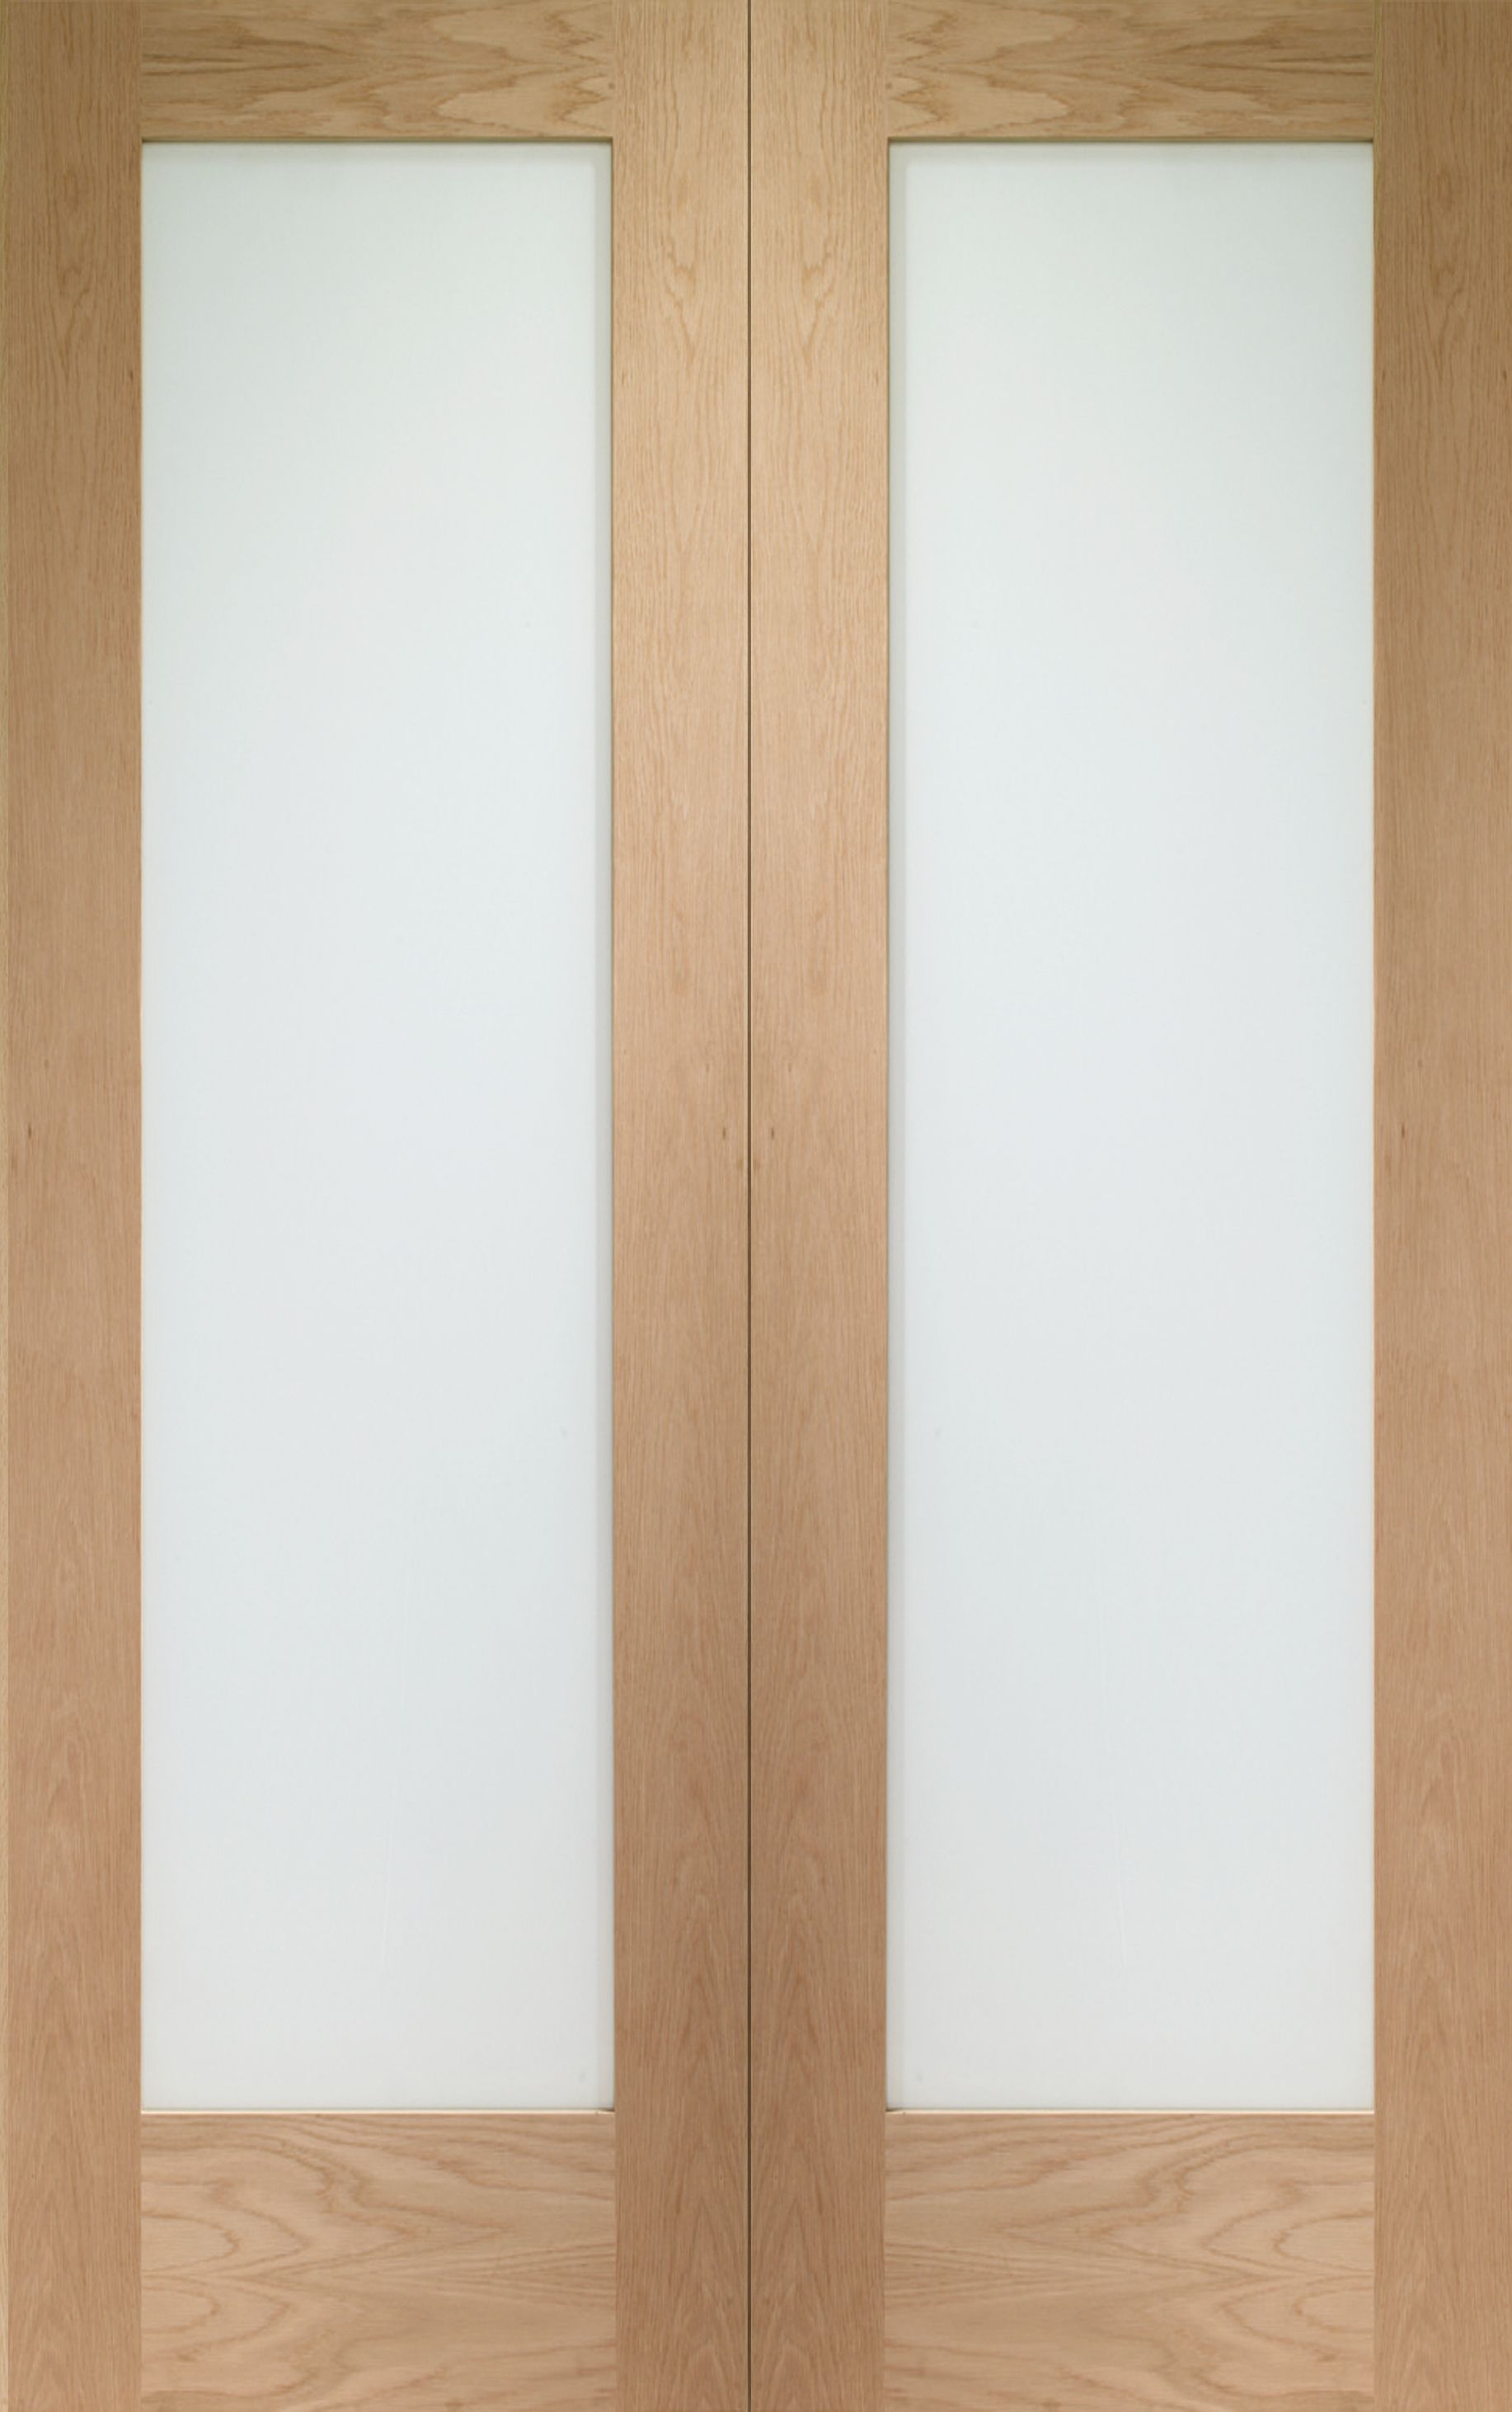 Image of Wickes Oxford Fully Glazed Rebated Internal Oak French Doors - 1981 x 1220mm